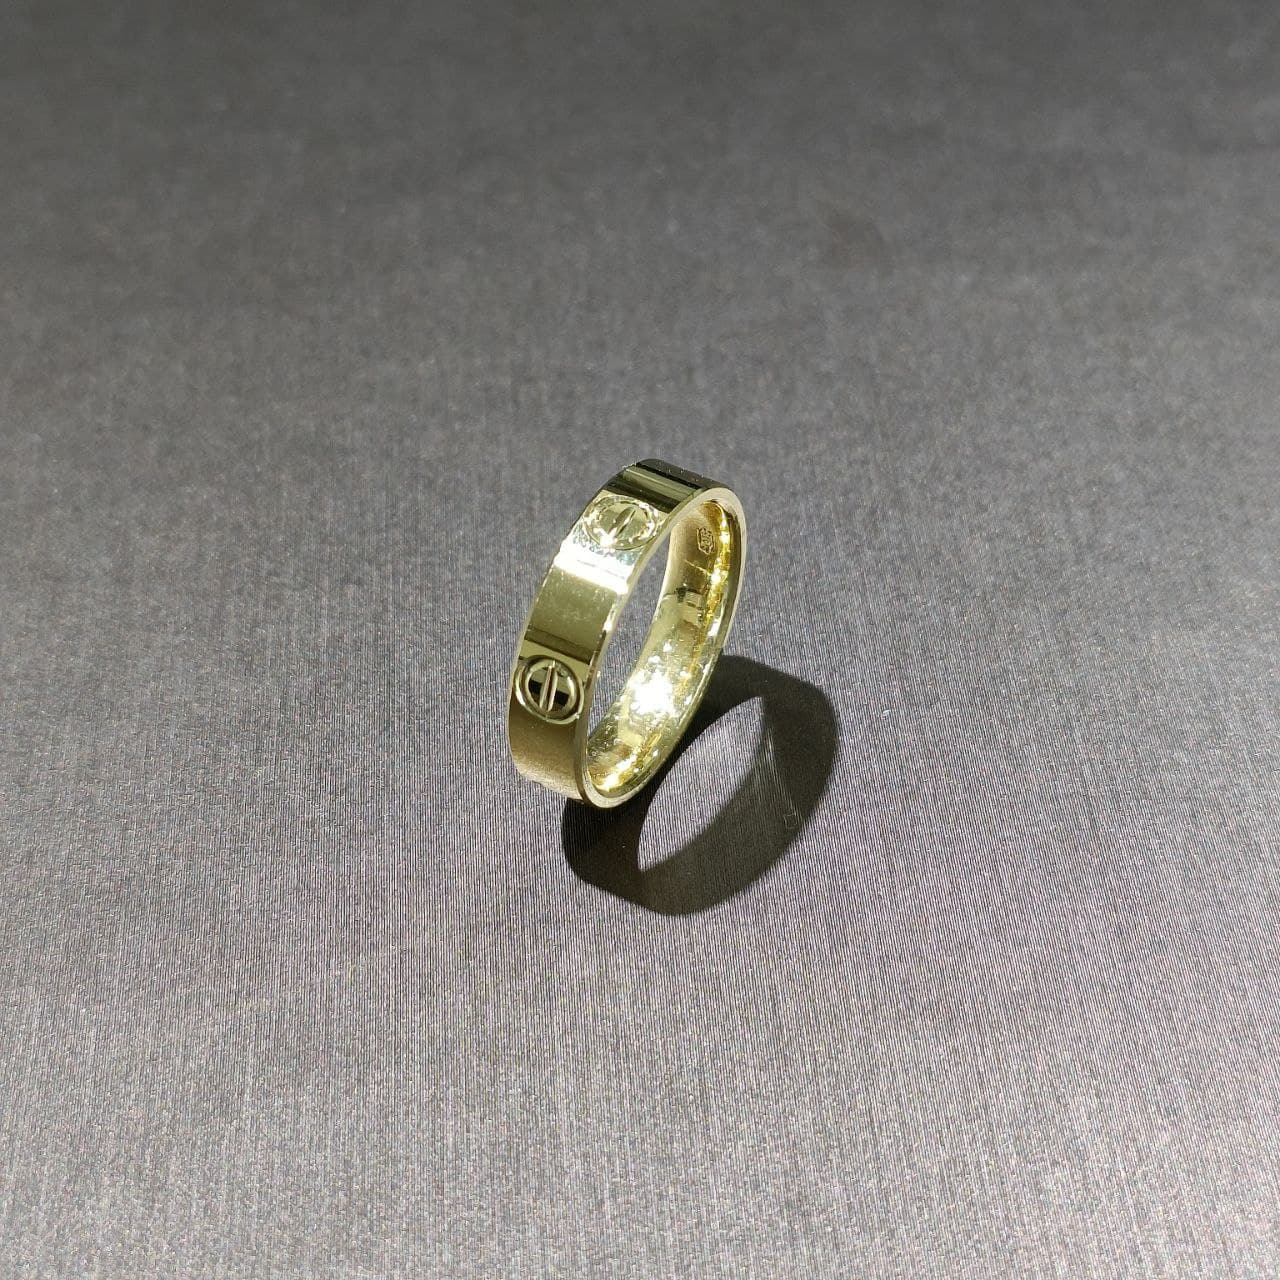 22k / 916 Gold C Design Ring heavy version-Rings-Best Gold Shop